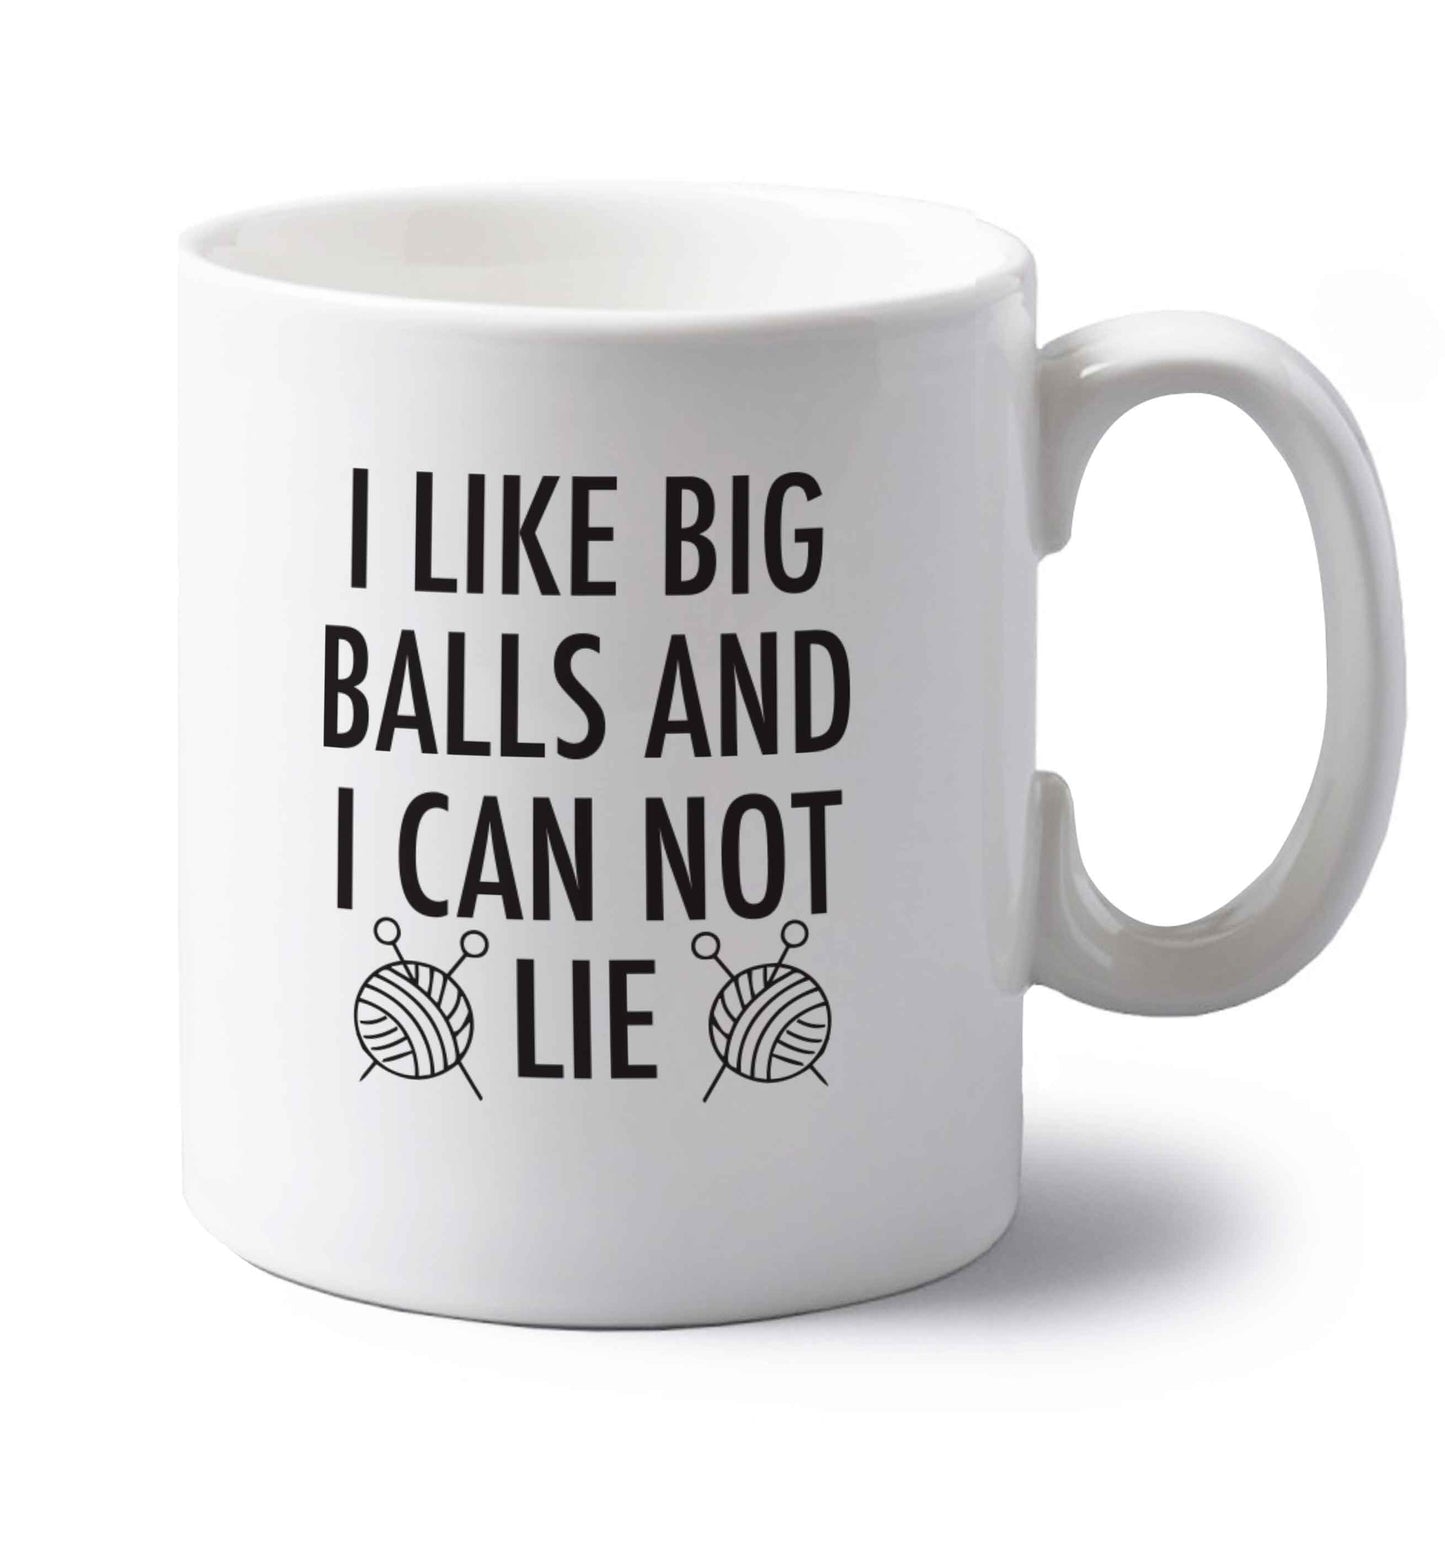 I like big balls and I can not lie left handed white ceramic mug 